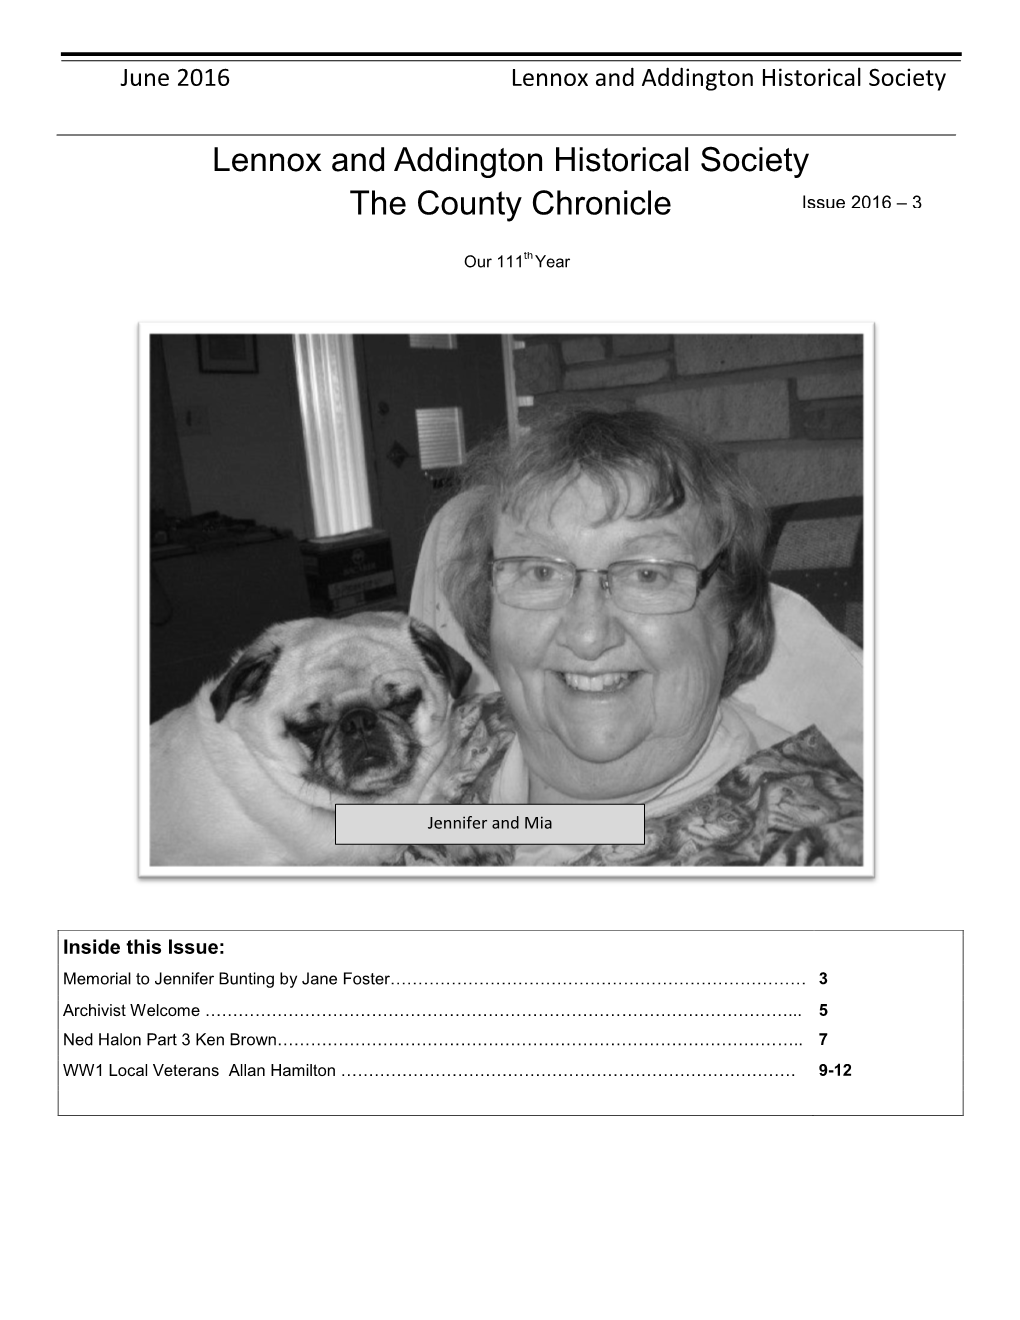 Lennox and Addington Historical Society the County Chronicle Issue 2016 – 3